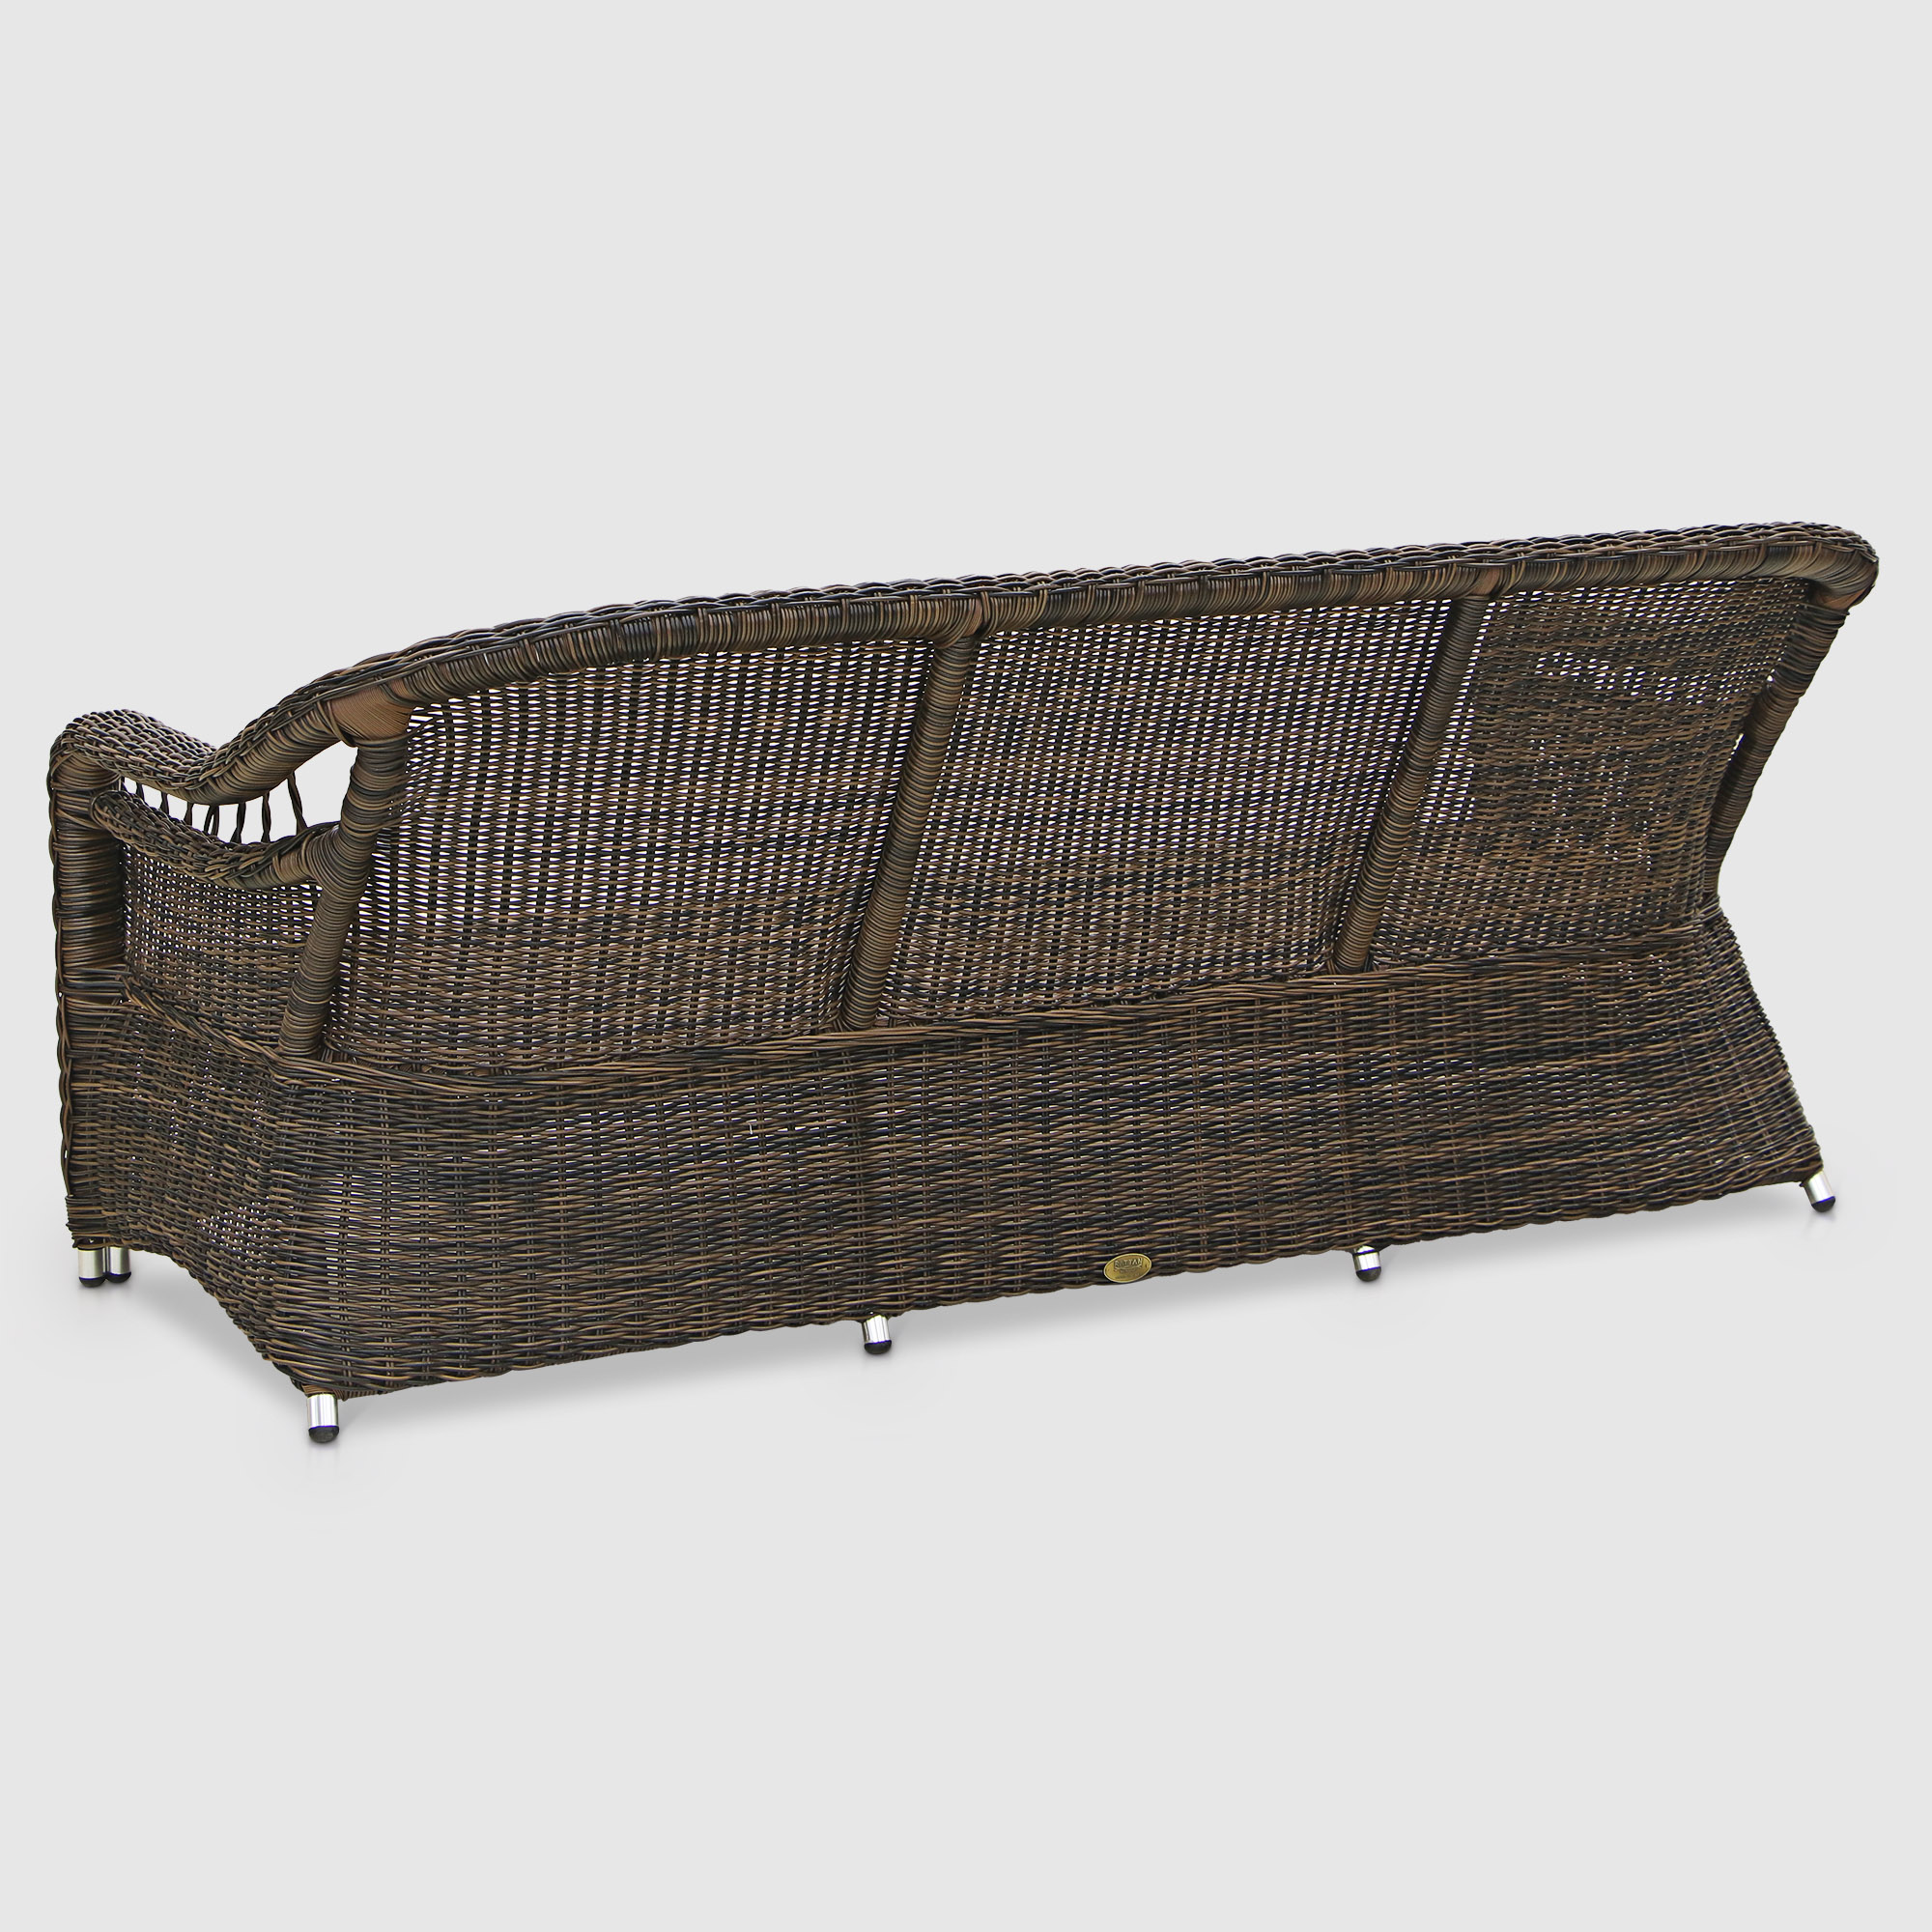 Комплект мебели NS Rattan Sky коричневый с бежевым 4 предмета, цвет бежевый, размер 180х78х78 - фото 6